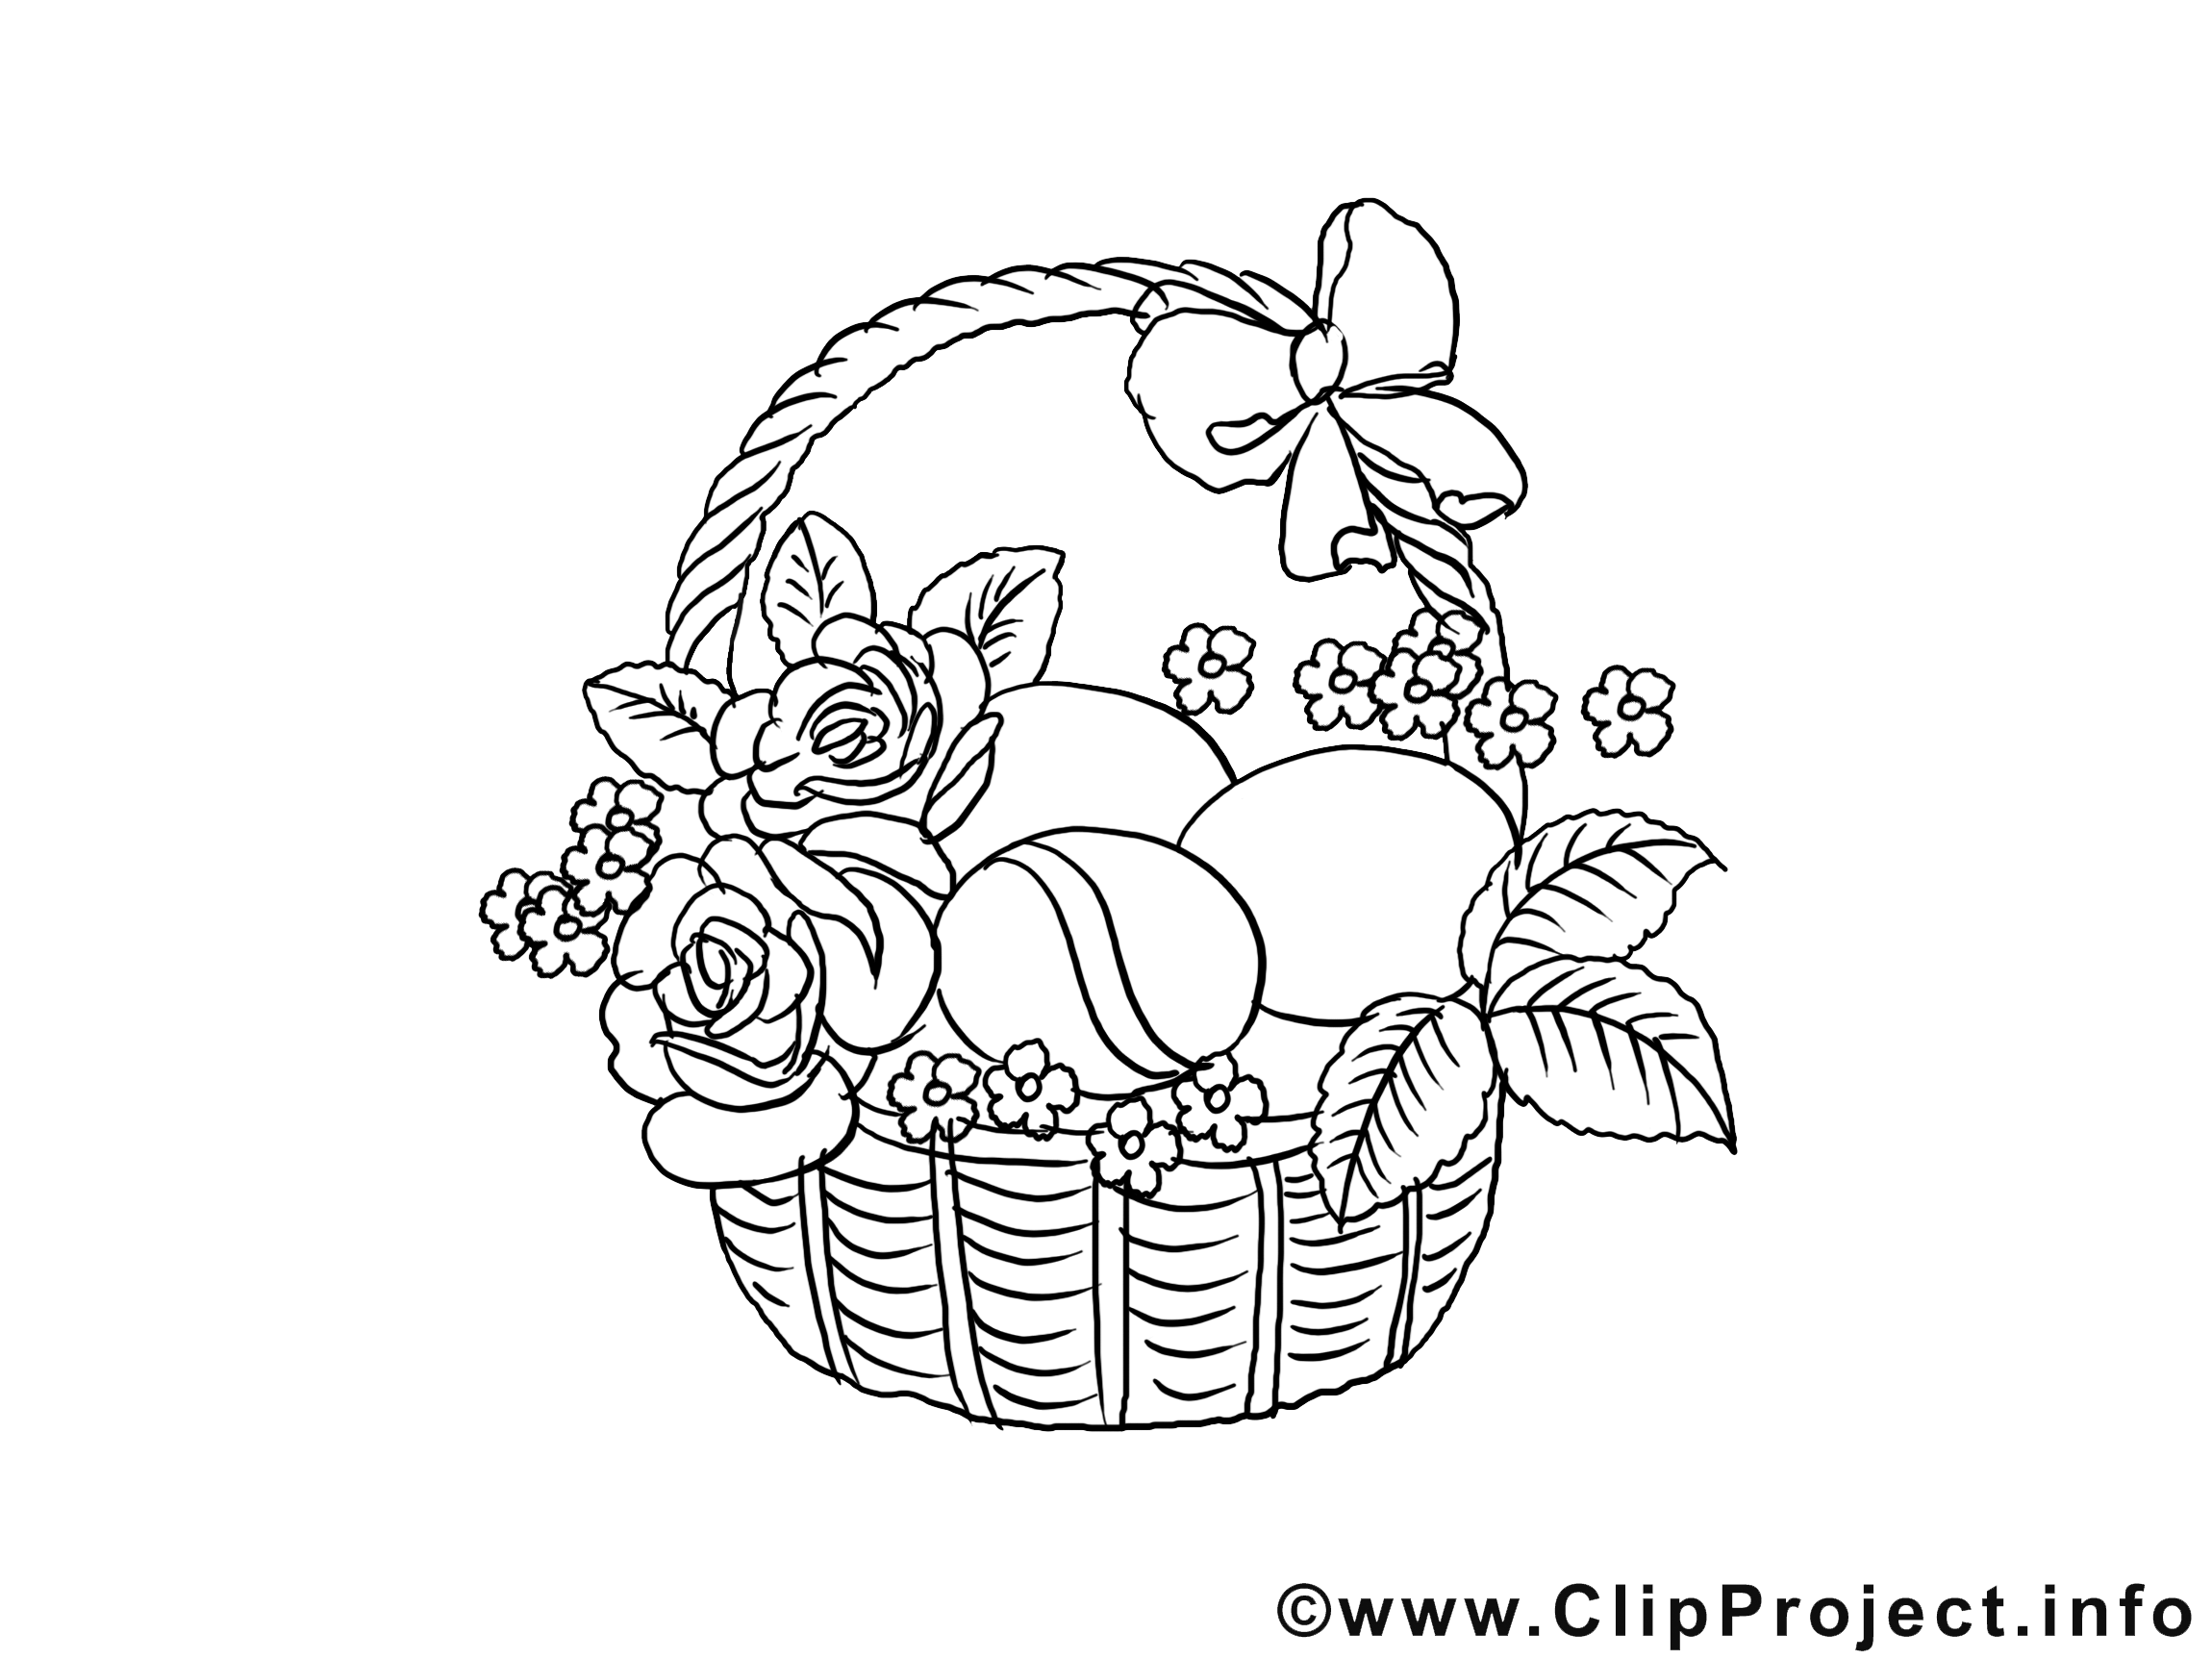 Roses illustration – Pâques à imprimer